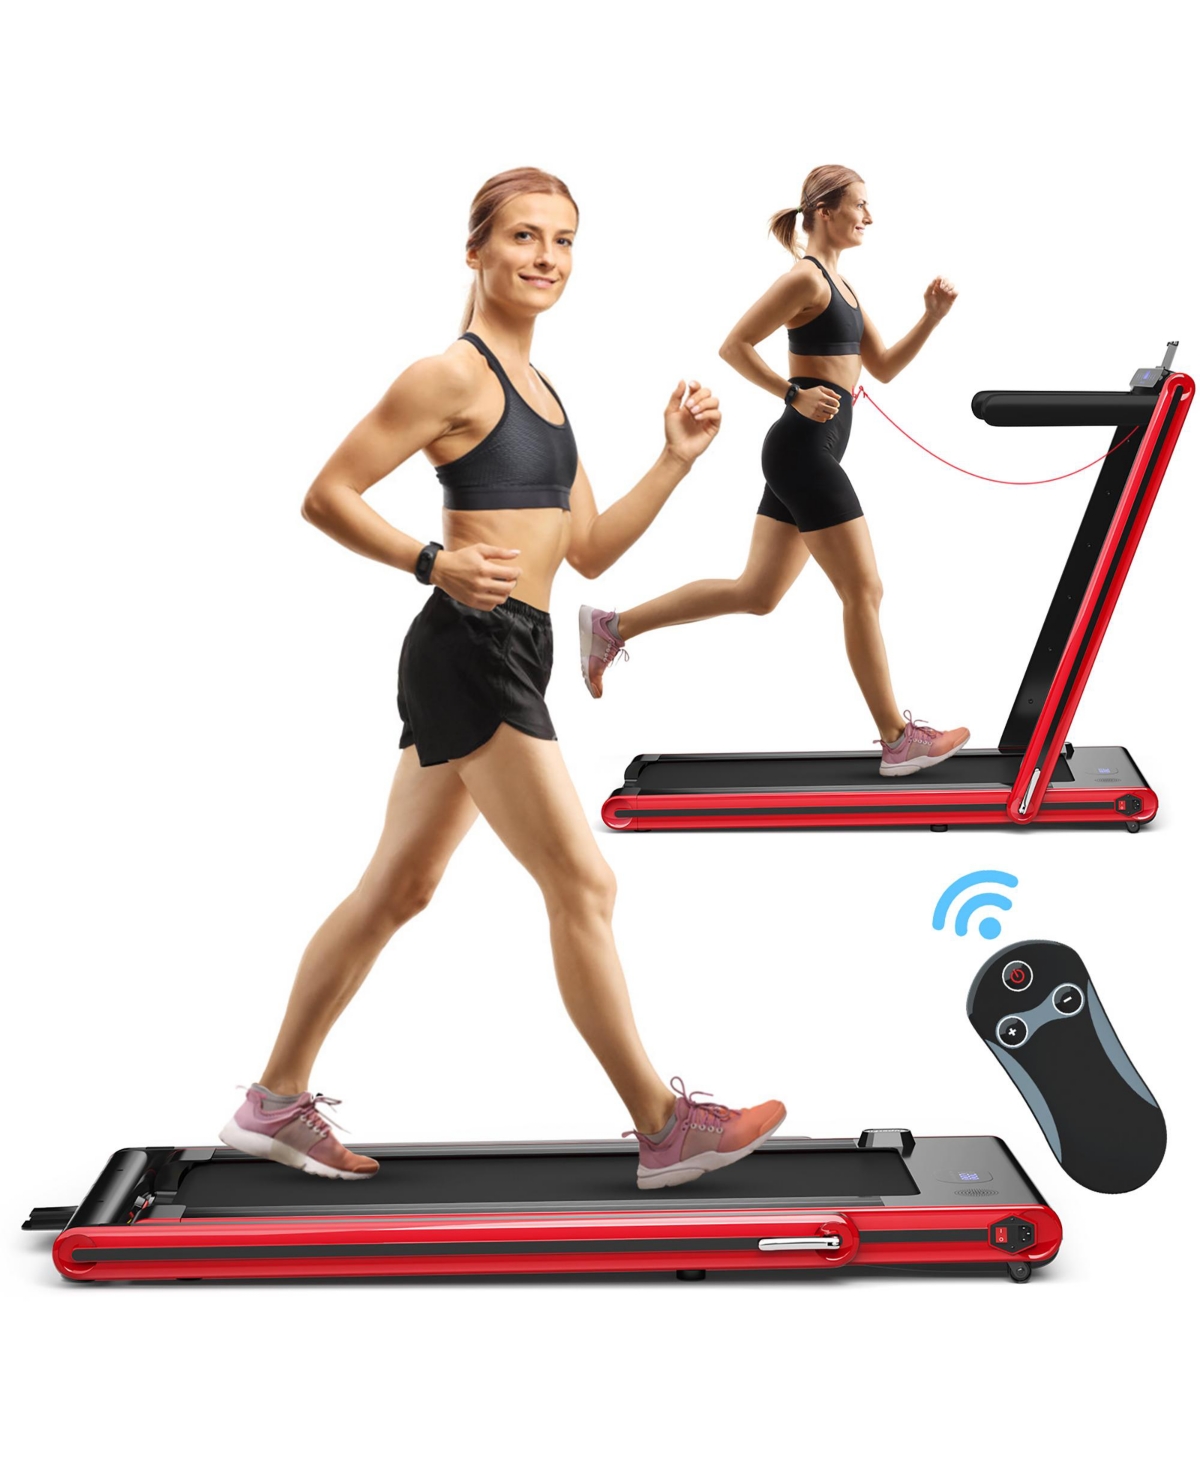 2-in-1 Folding Treadmill 2.25HP Jogging Machine w/ Dual Led Display - Navy